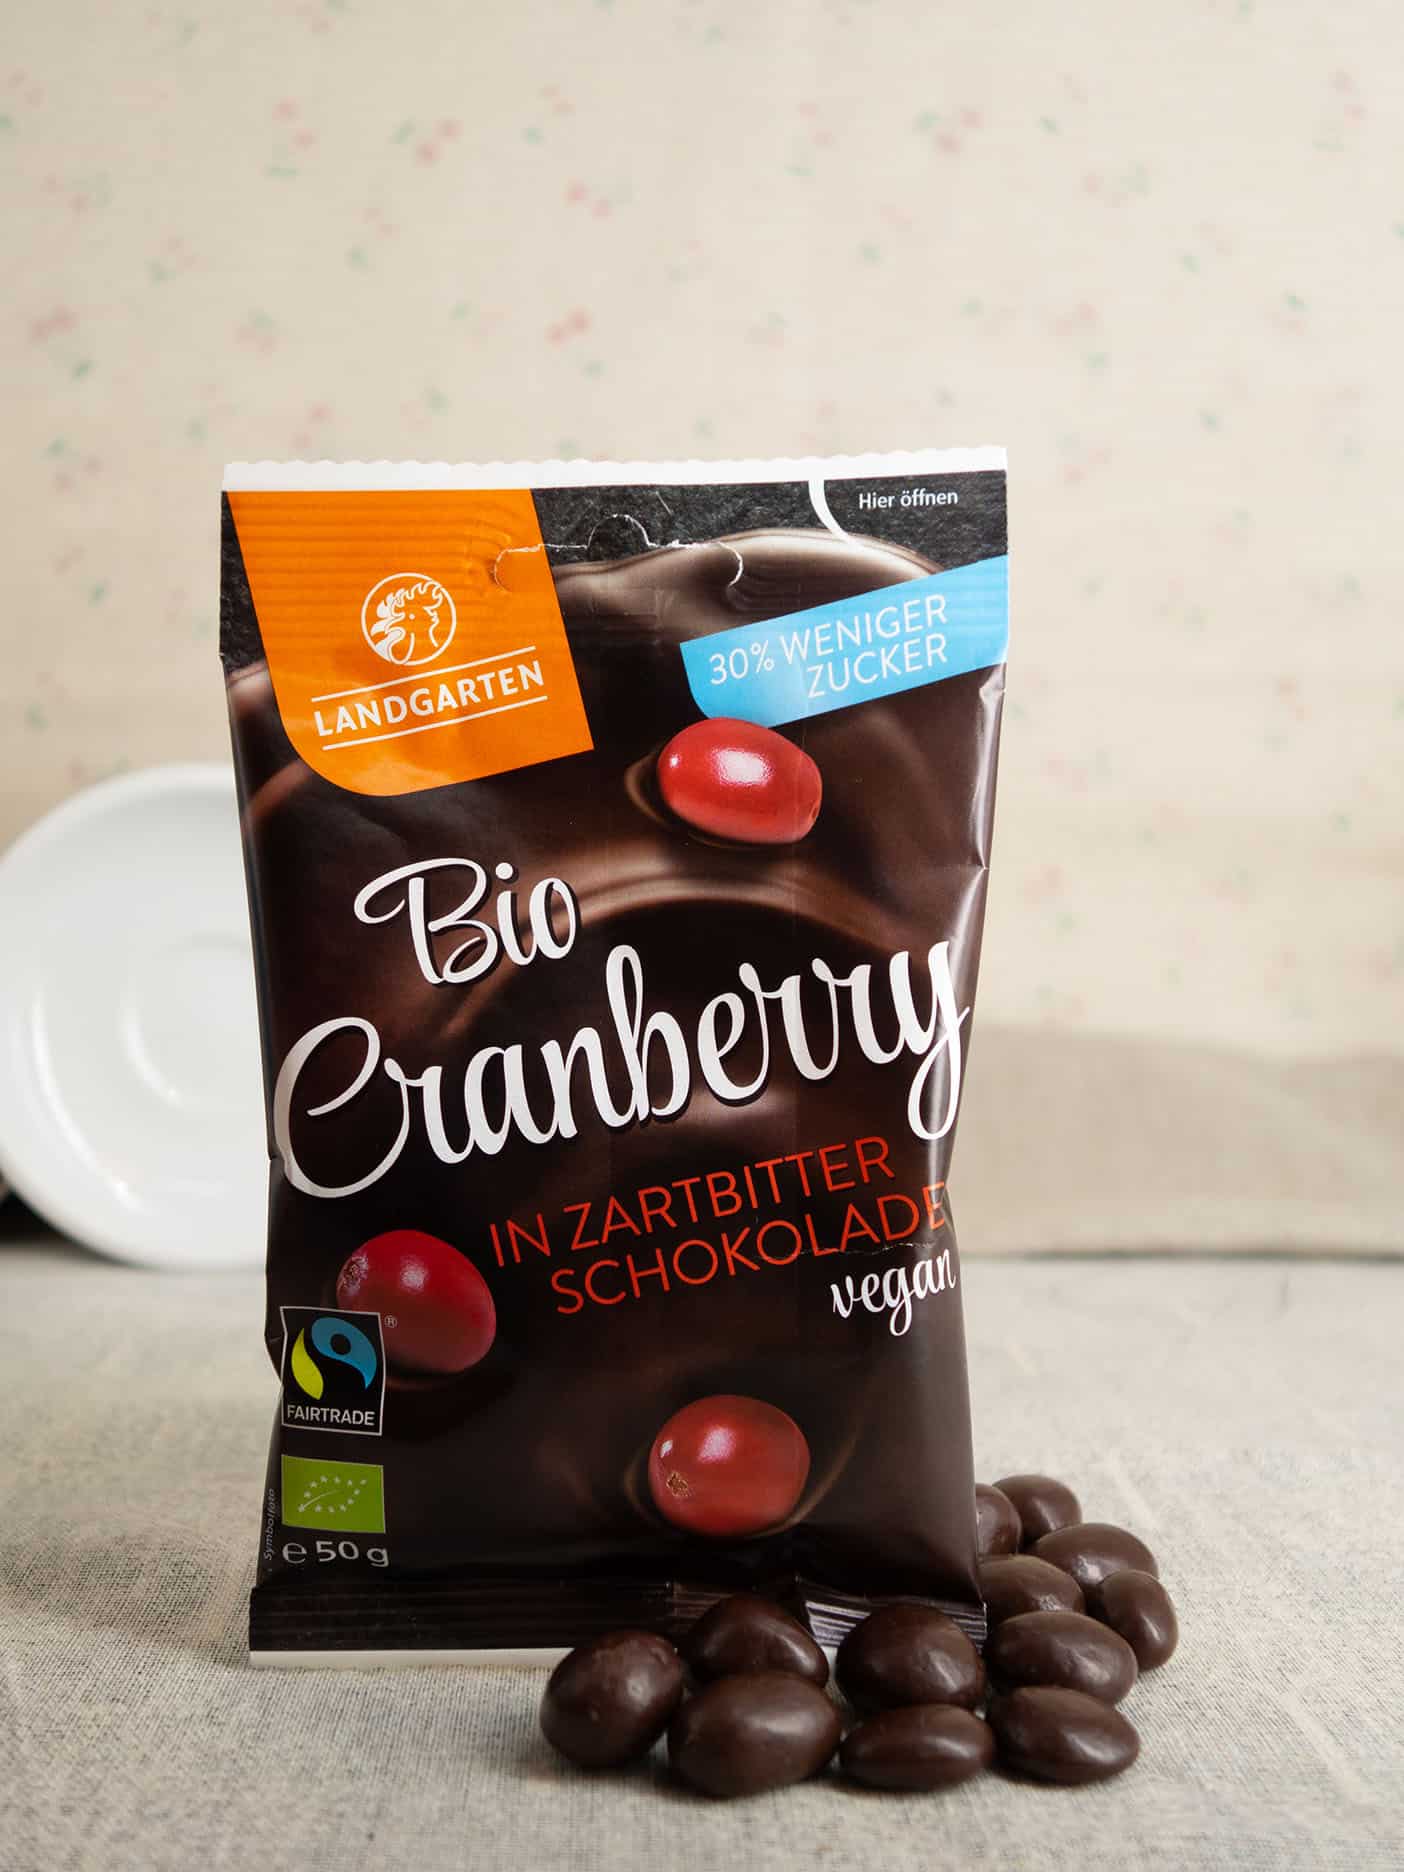 Bio Cranberry in Zartbitter-Schokolade (zuckerreduziert) - Landgarten ...